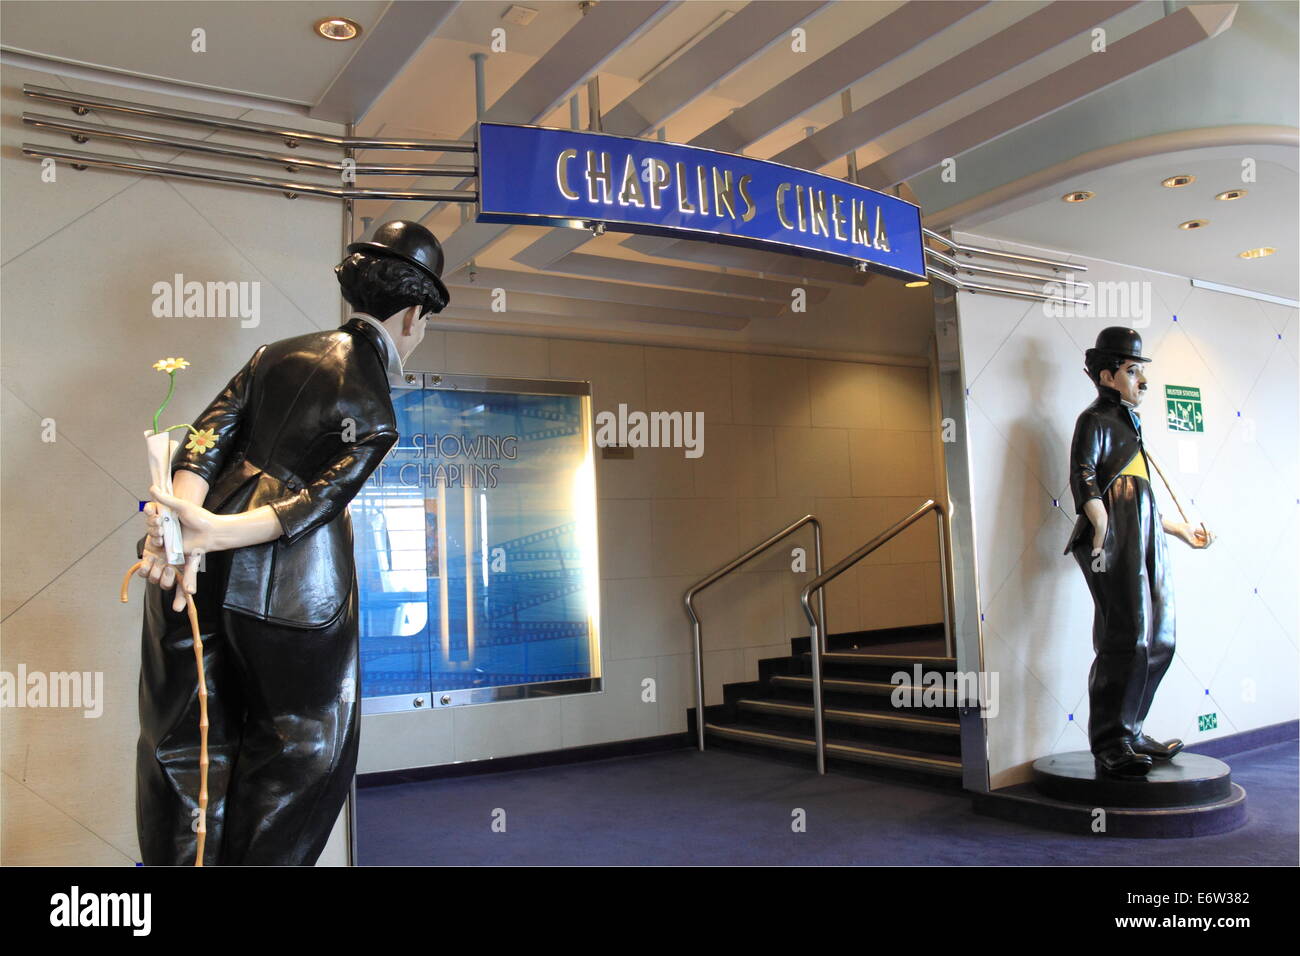 Chaplin's Cinema, P&O Cruises Oriana, Norway 2014 Stock Photo